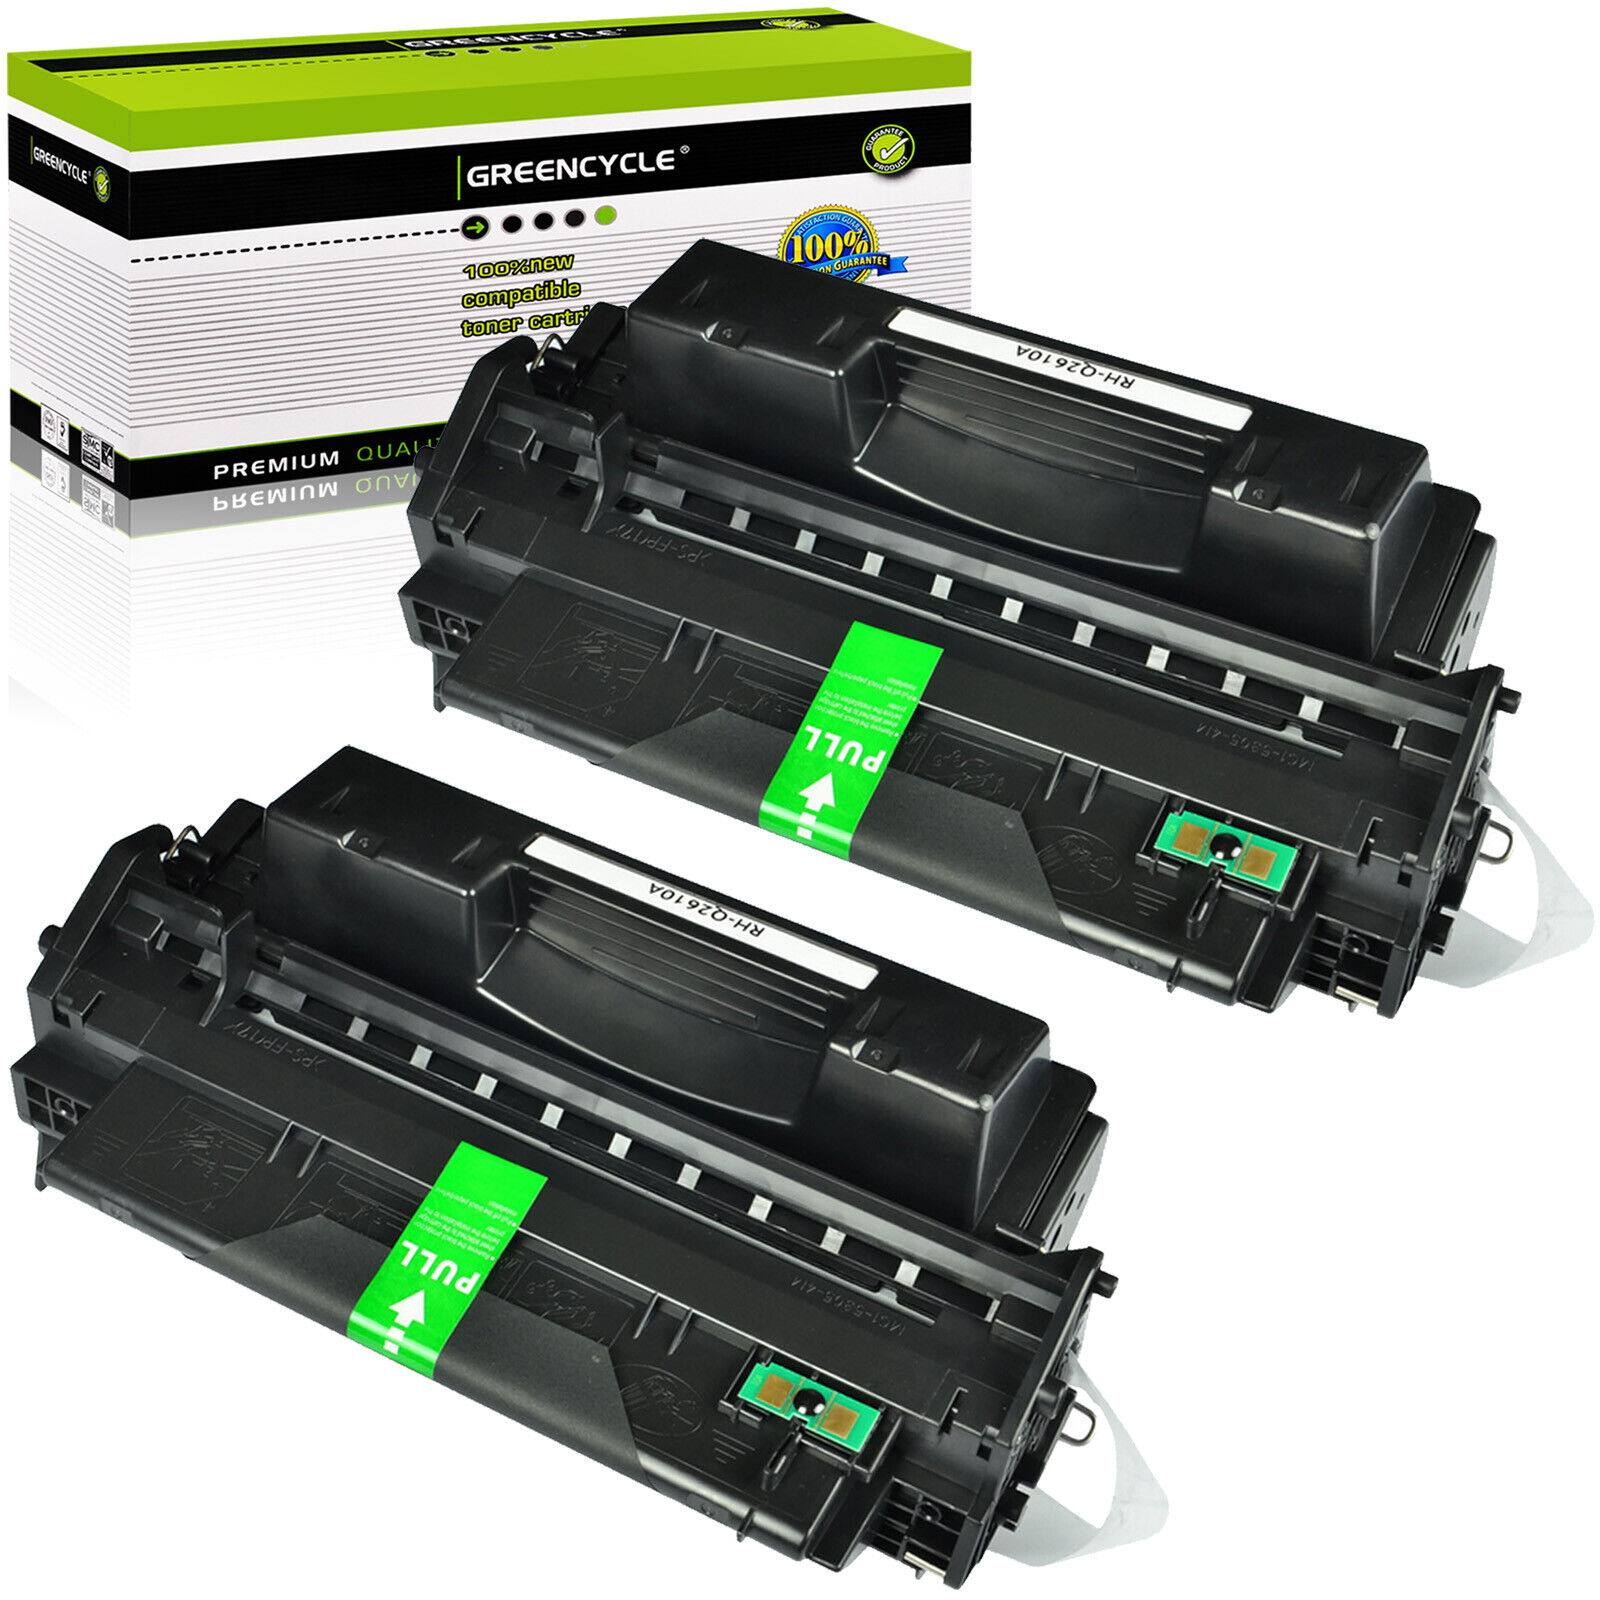 2PK Q2610A 10A Toner Cartridge Compatible with HP Laserjet 2300 2300L 2300DTN 